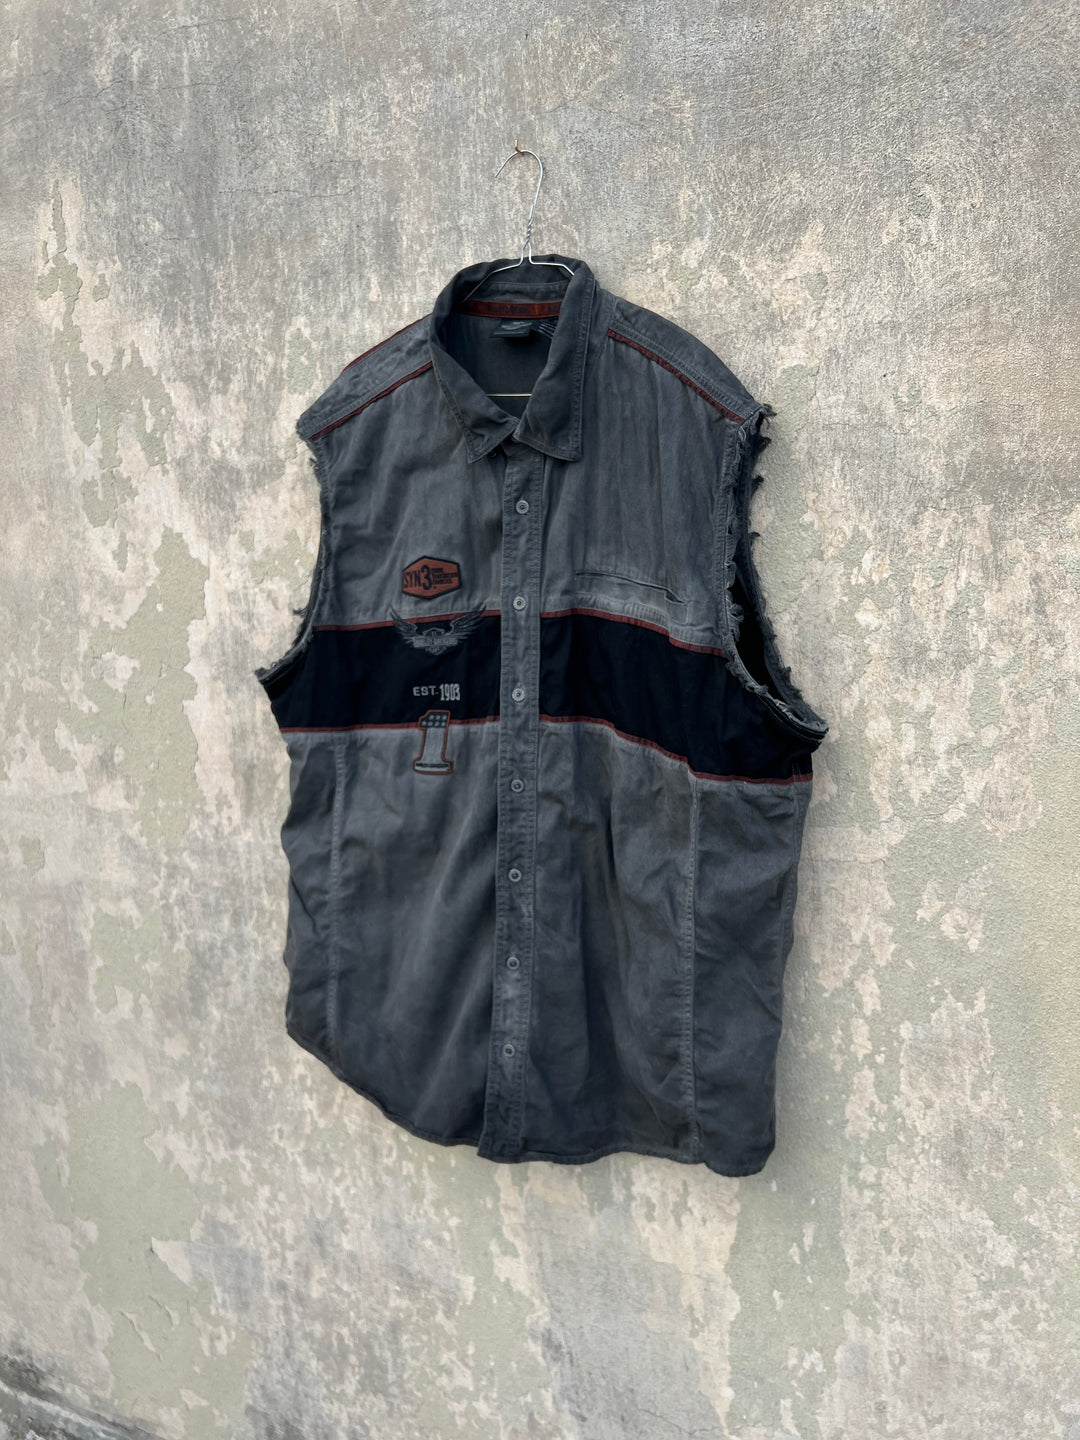 Harley Davidson Vintage Iron Block Blowout Sleeveless Shirt Men’s Extra Large